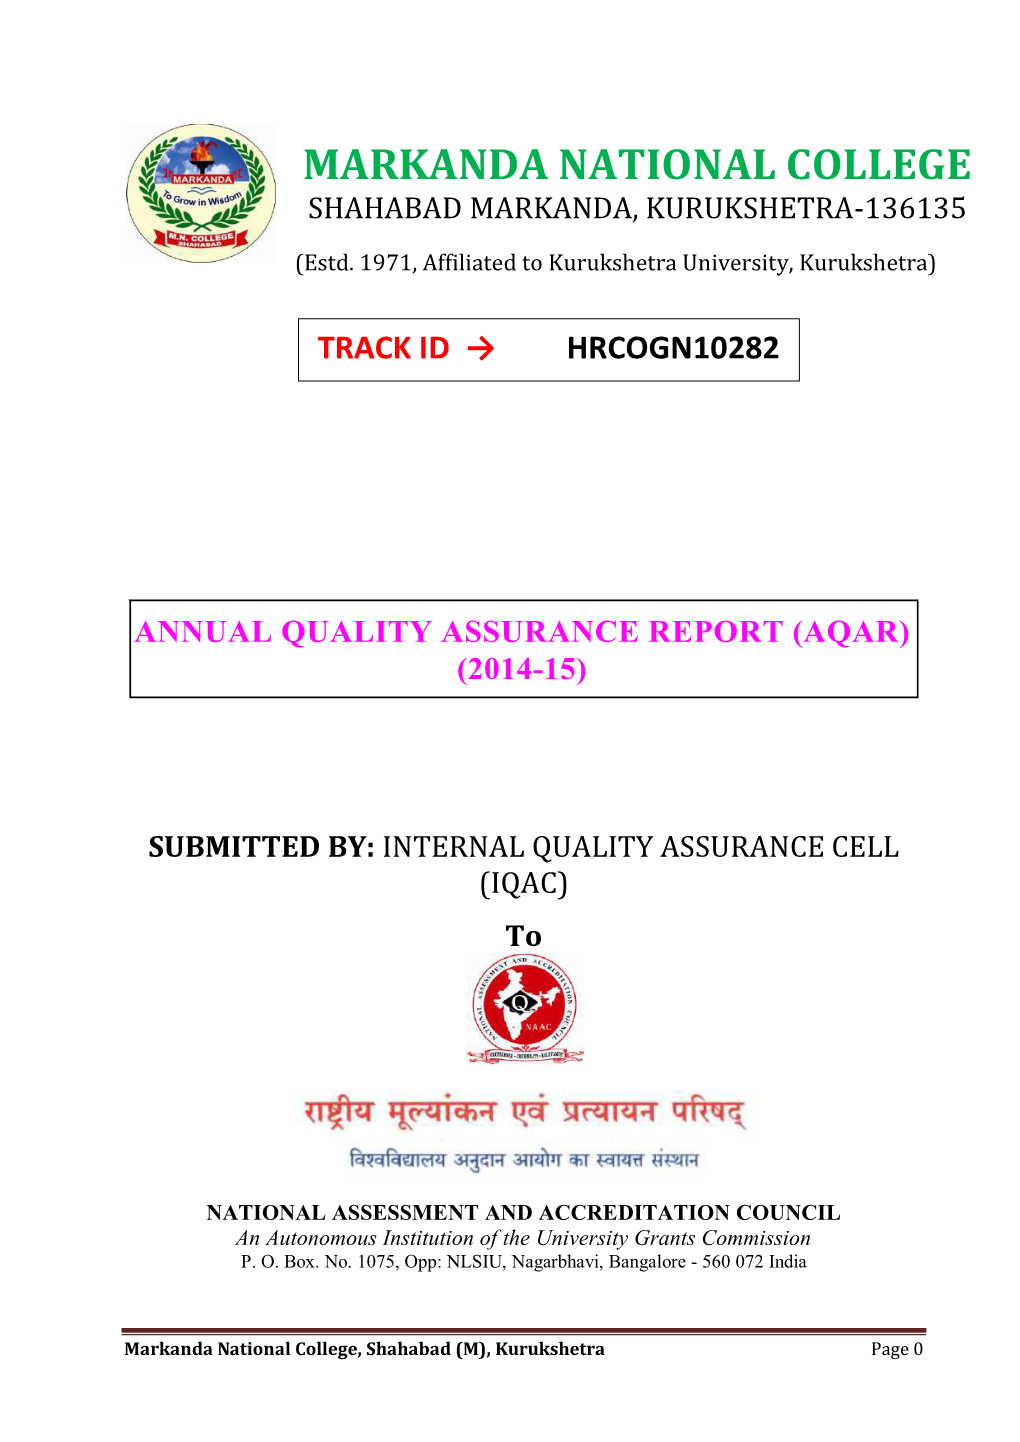 Annual Quality Assurance Report (AQAR) of the IQAC 2014-2015